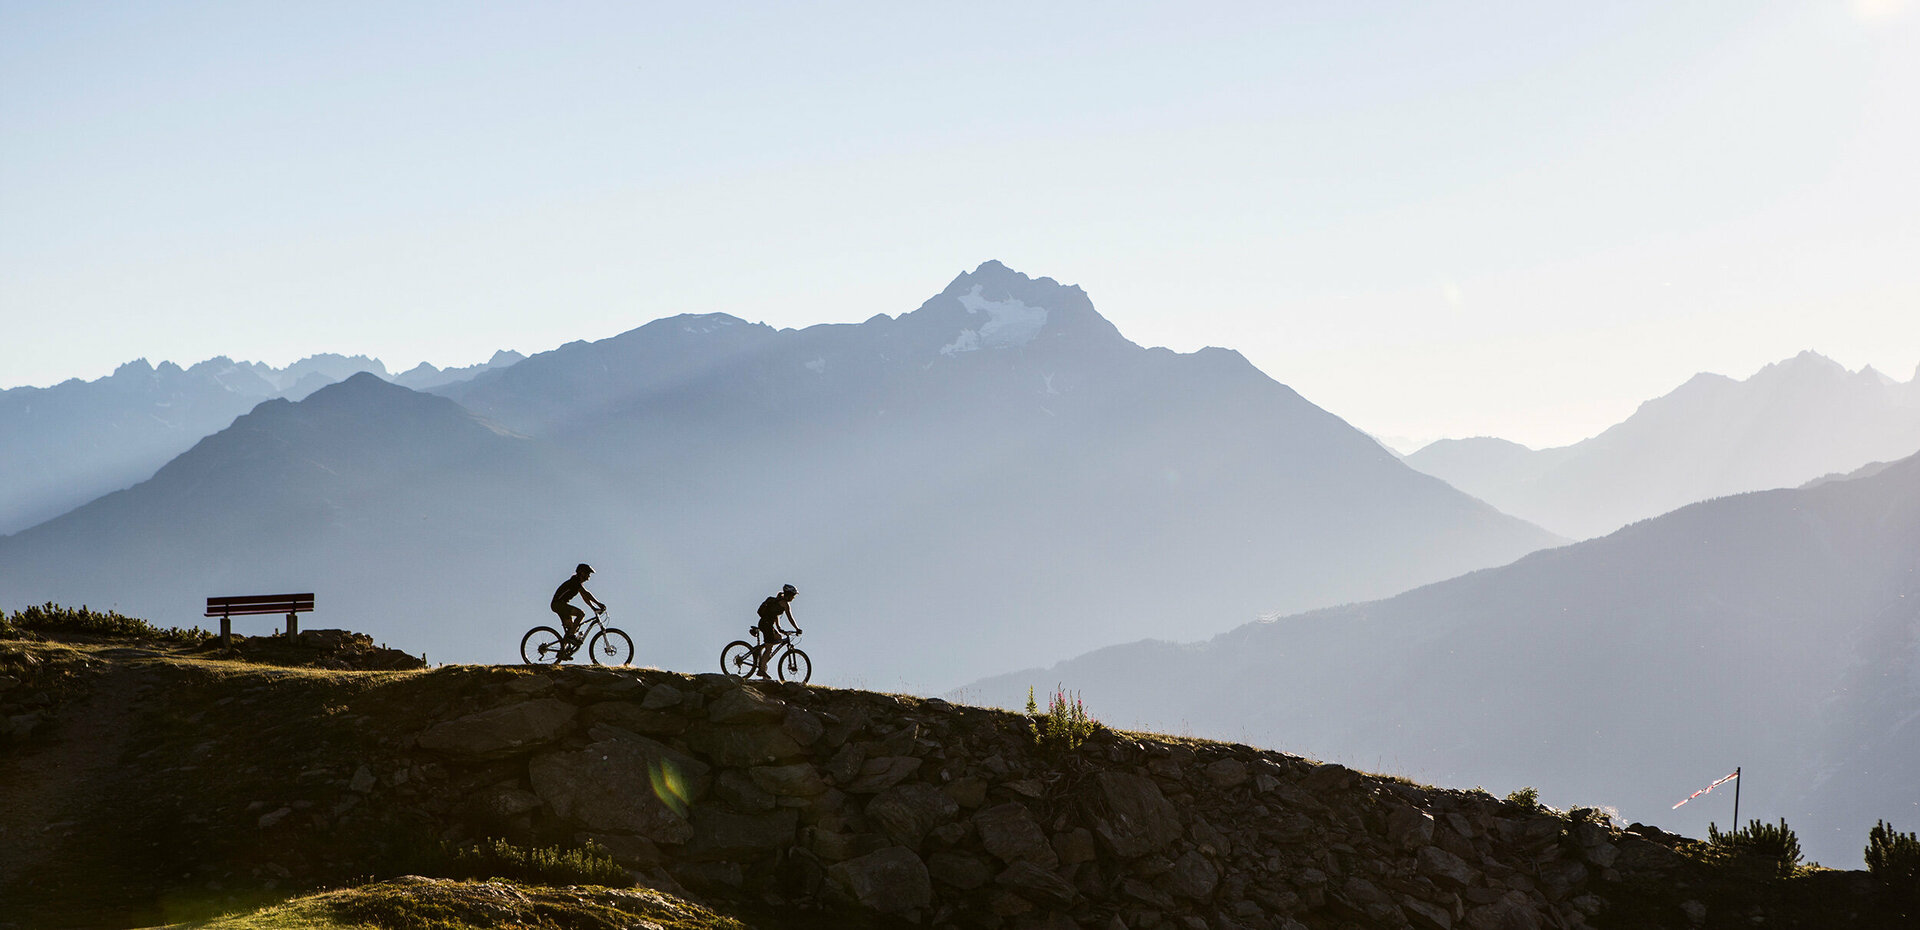  Mountainbiken, ©Tirol West, Daniel Zangerl